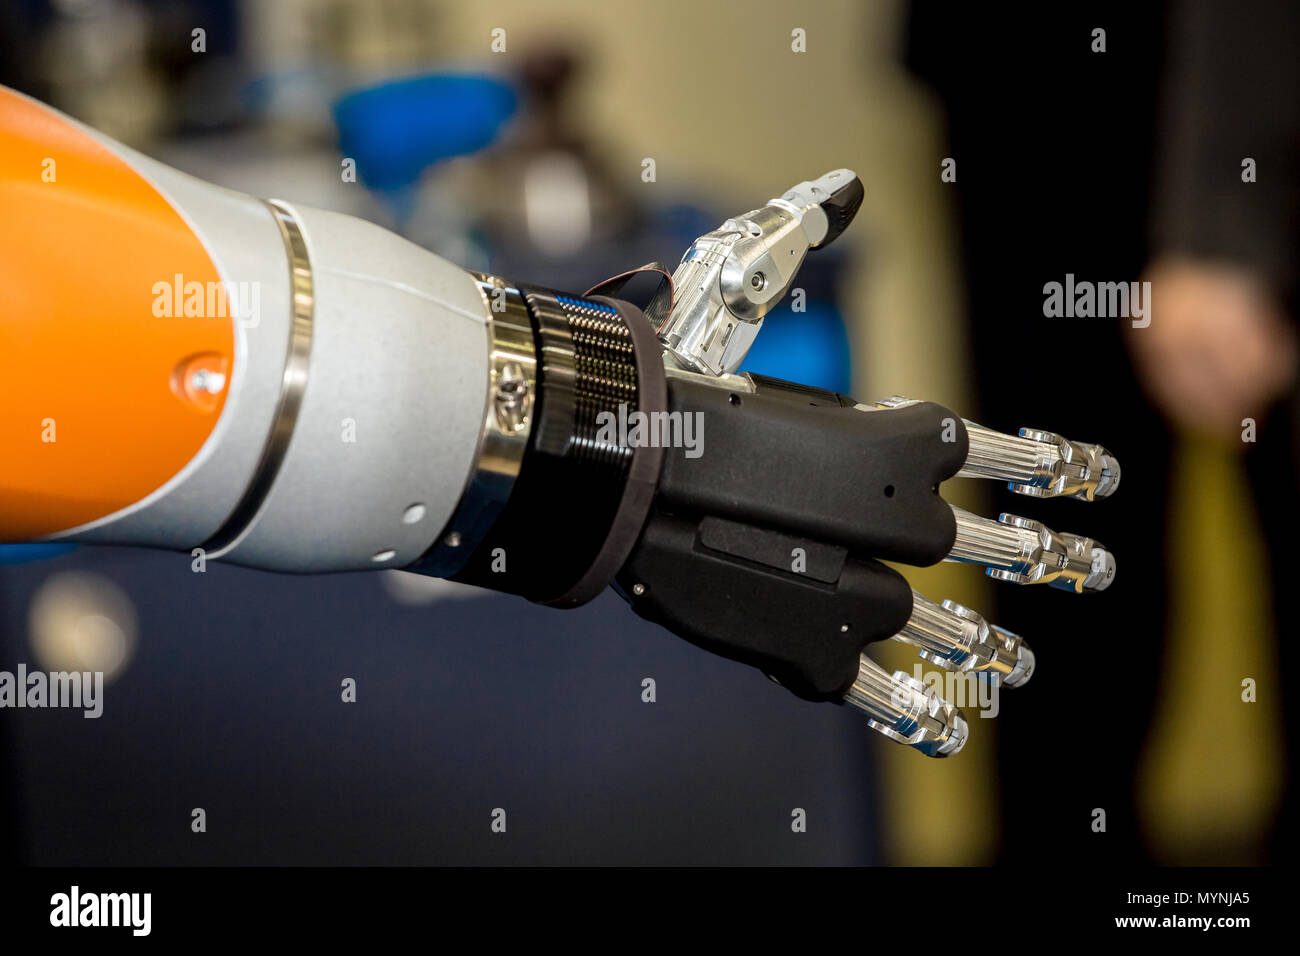 Robot arm view Stock Photo